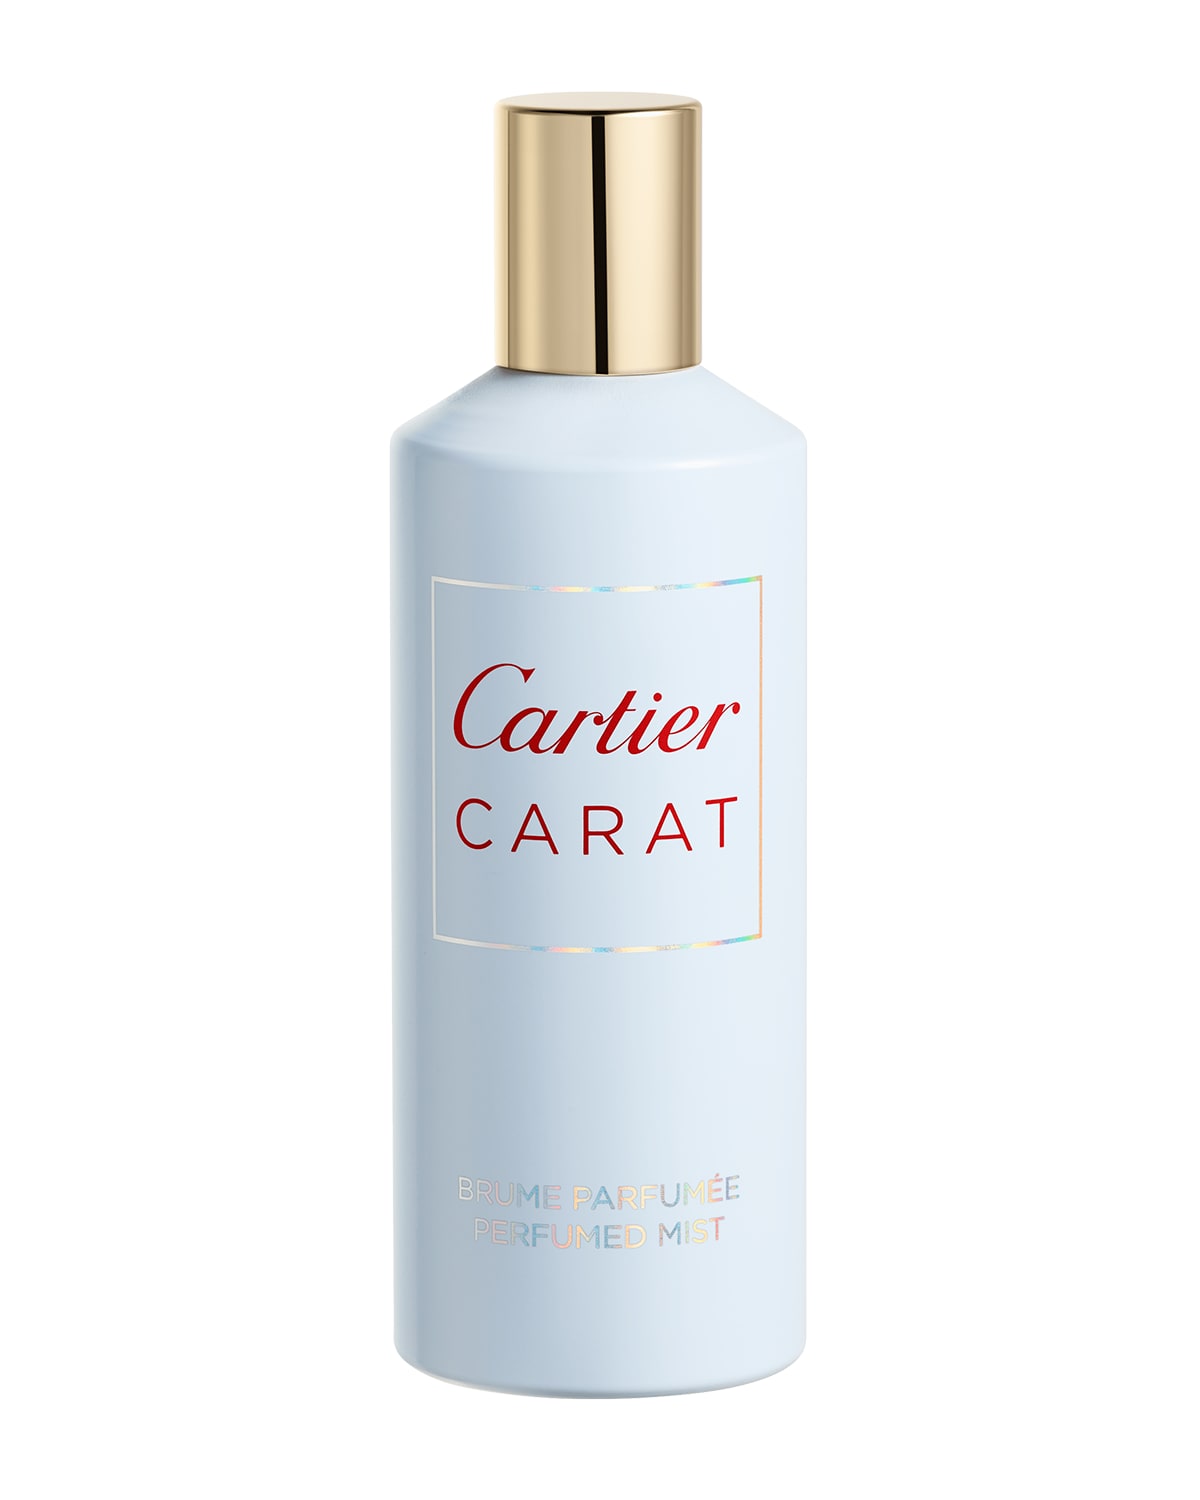 Cartier Carat Perfumed Body and Hair Mist, 3.3 oz./ 100 mL